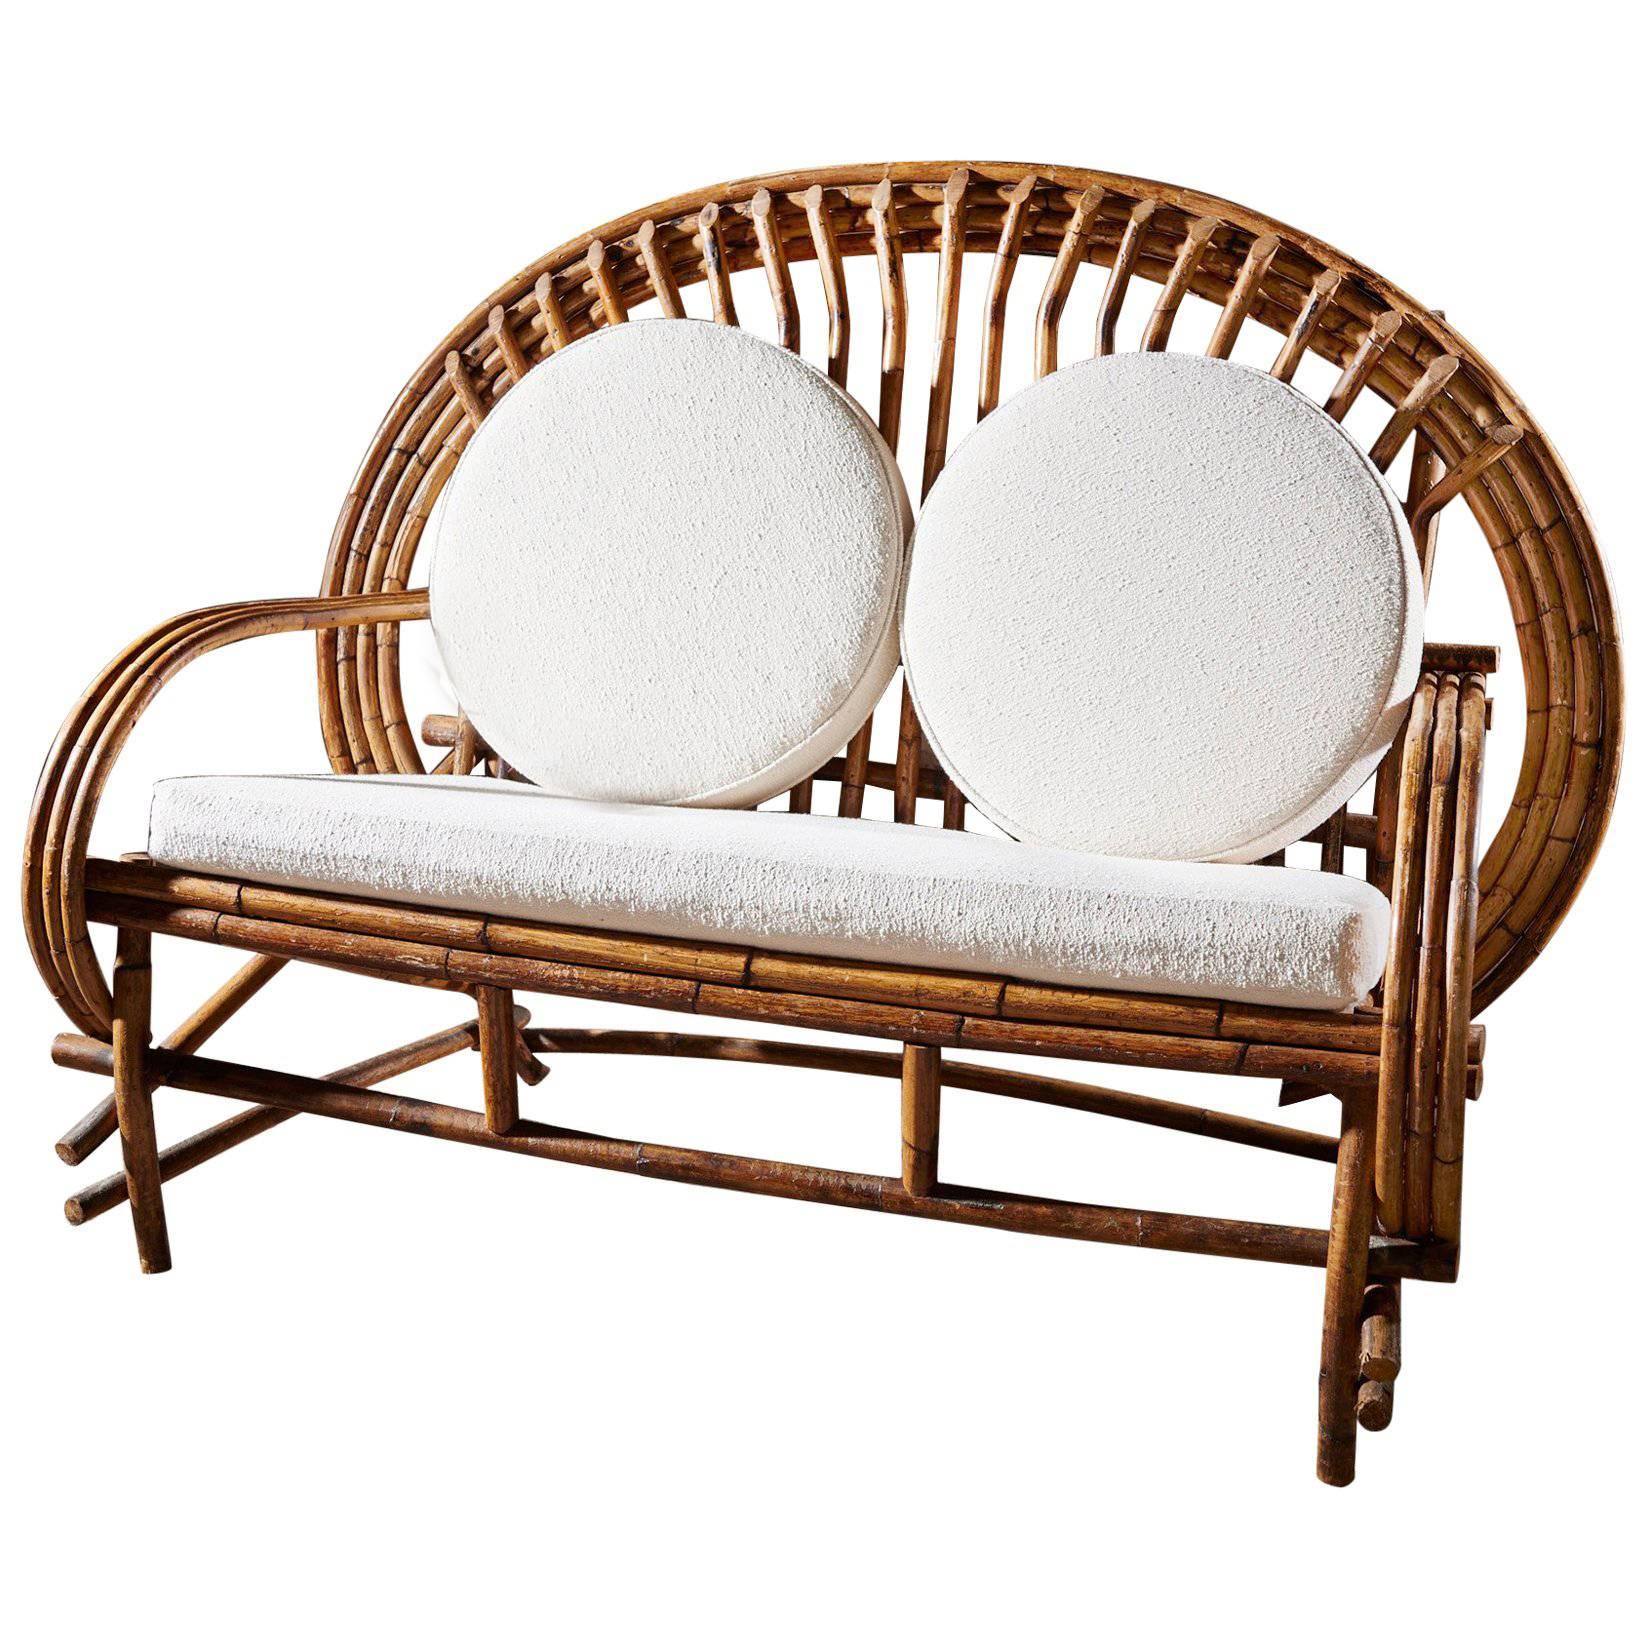 Stunning Mid-Century Bamboo Sofa For Sale